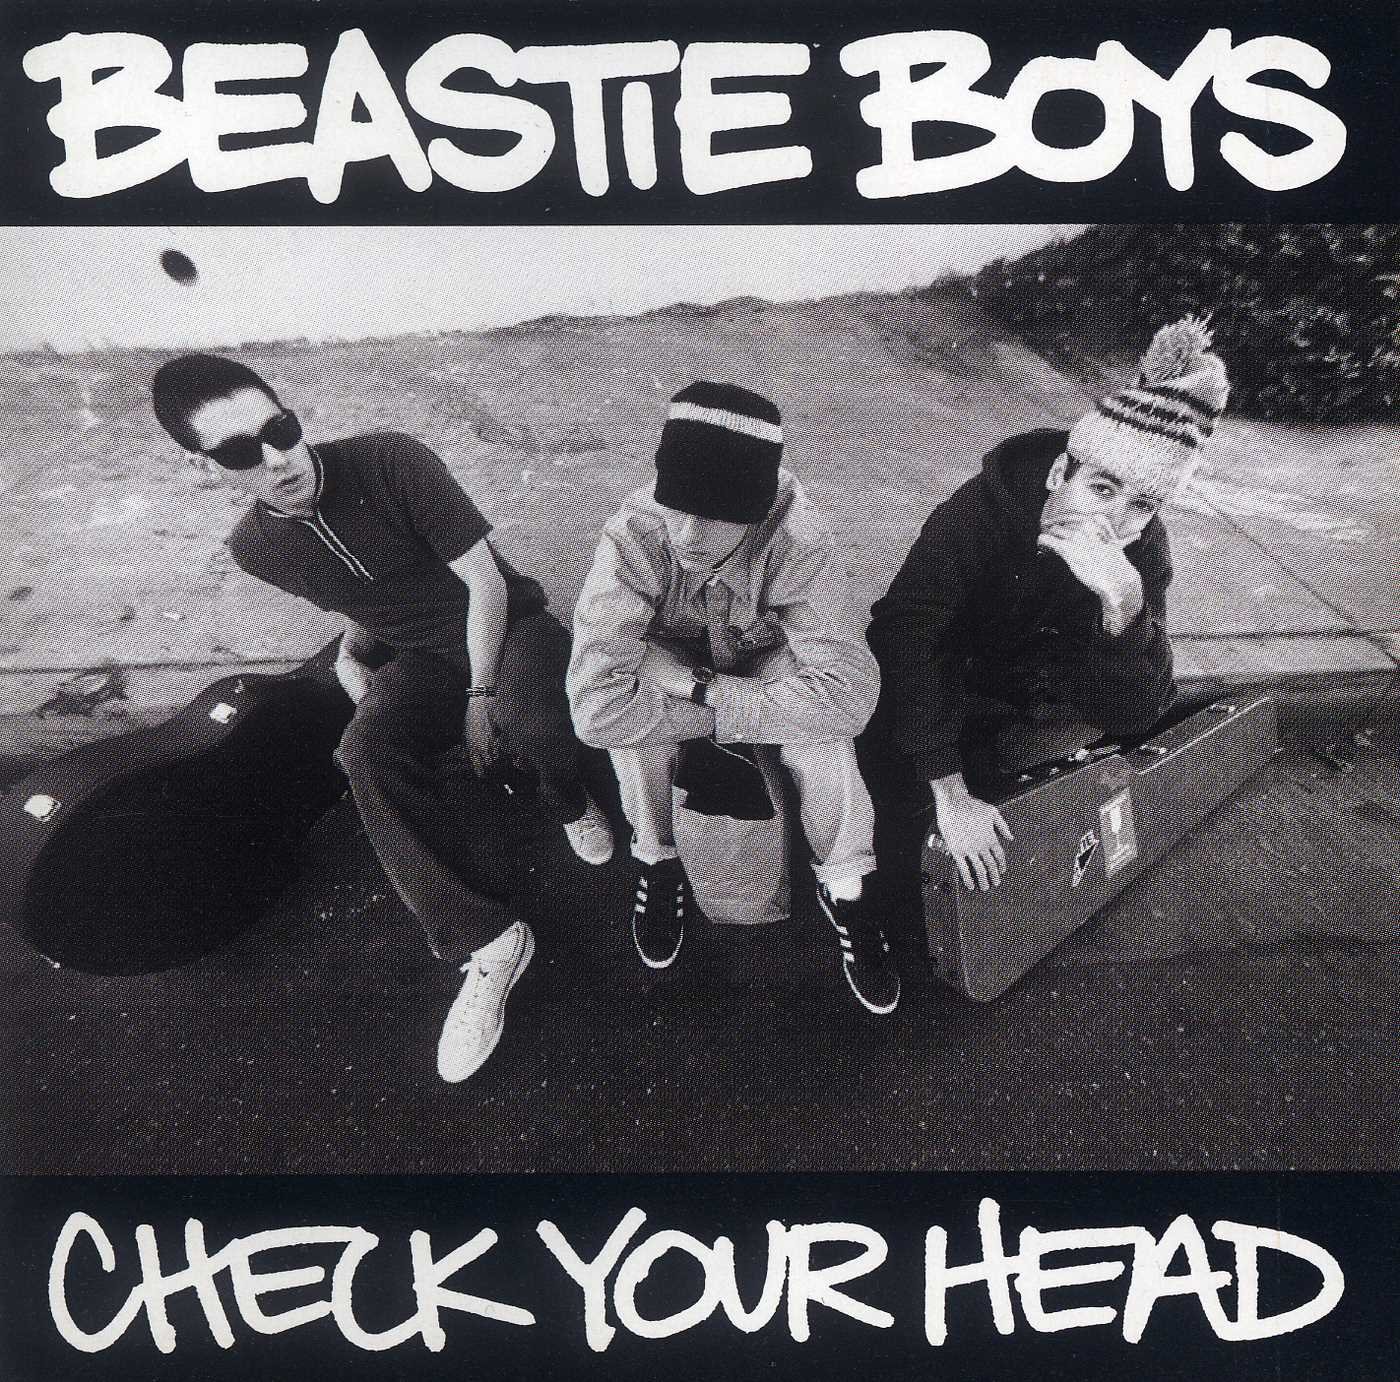 Beastie Boys "Cheek Your Head" 2LP